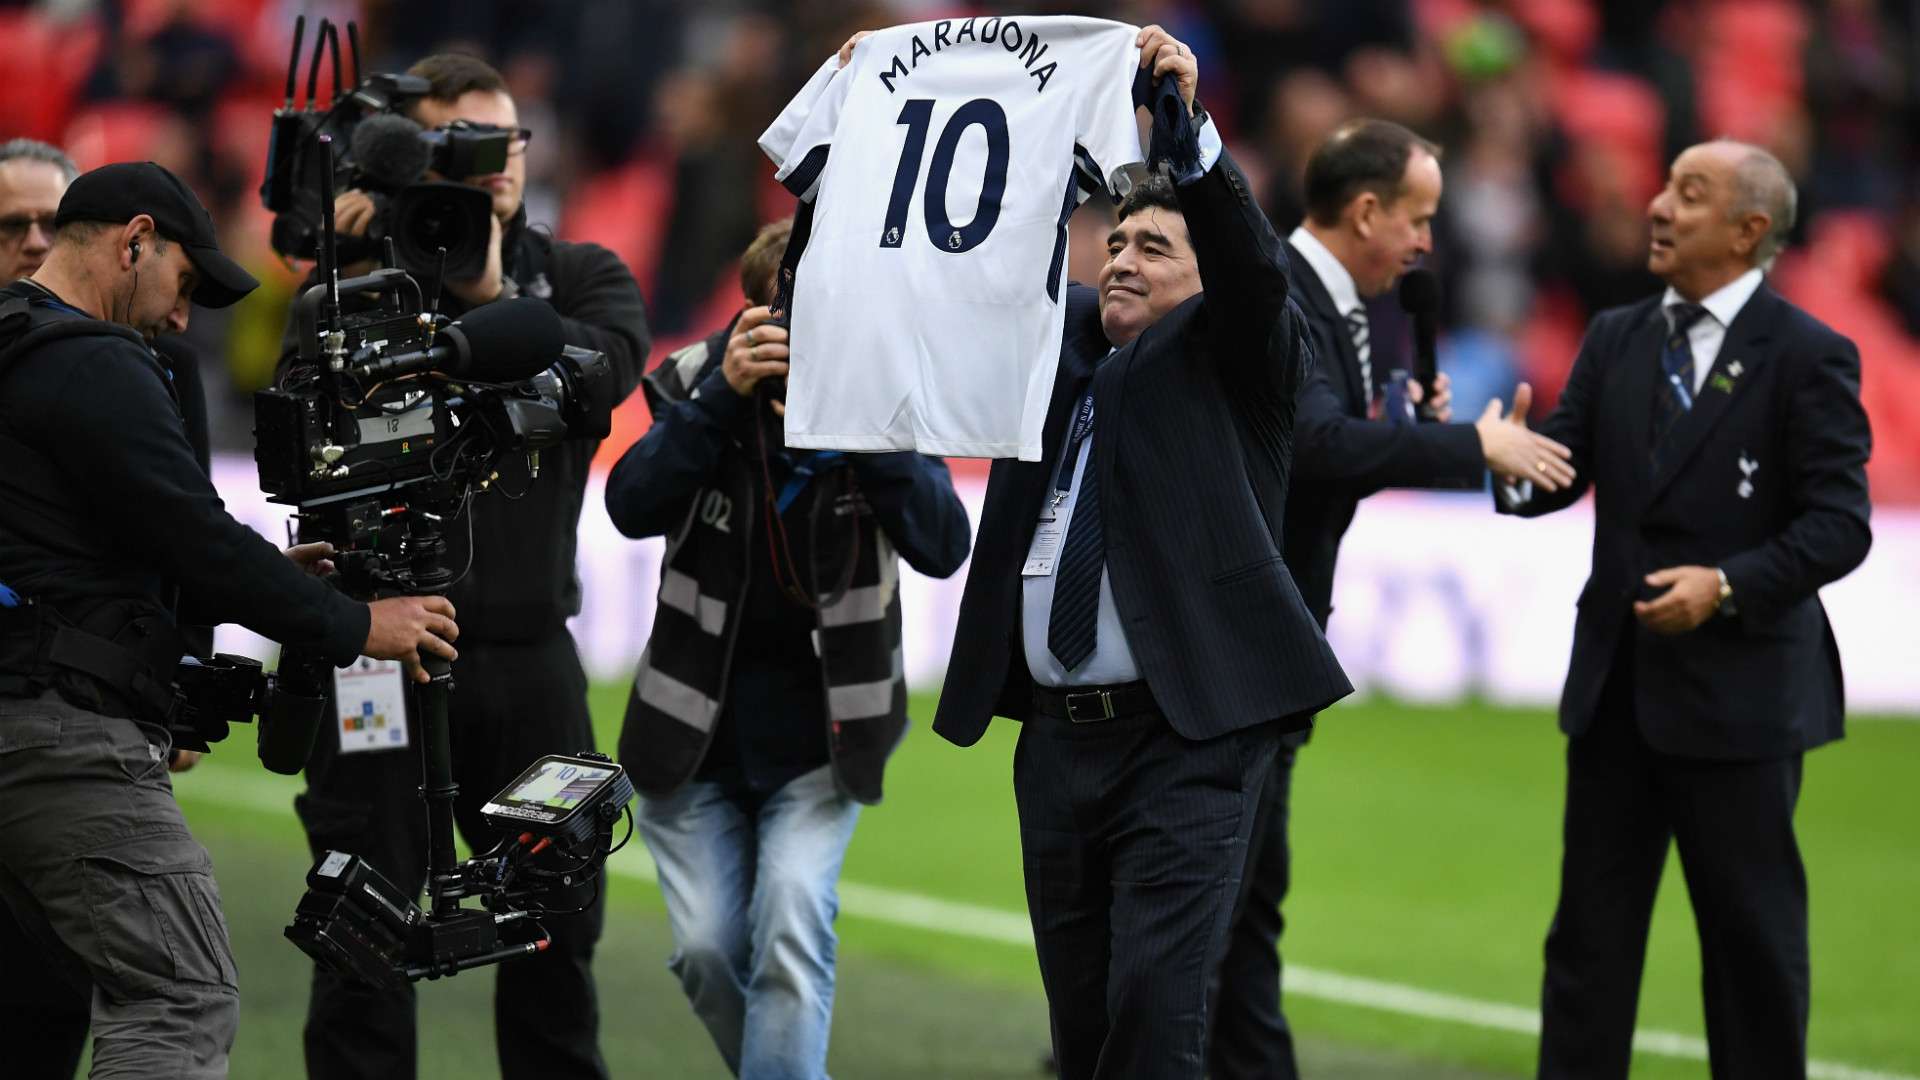 Diego Maradona Tottenham Liverpool Premier League 22102017